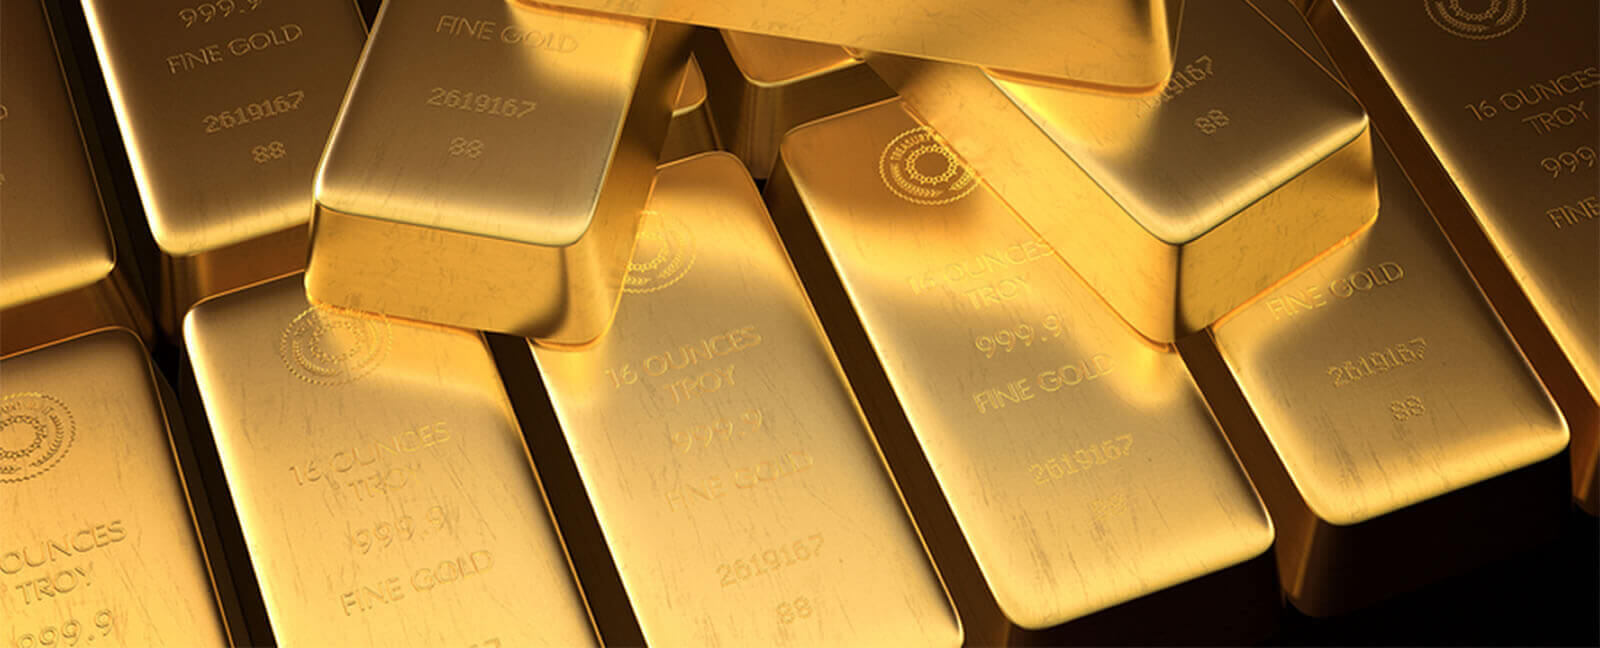 Brisbane Gold Company Gold Buyers